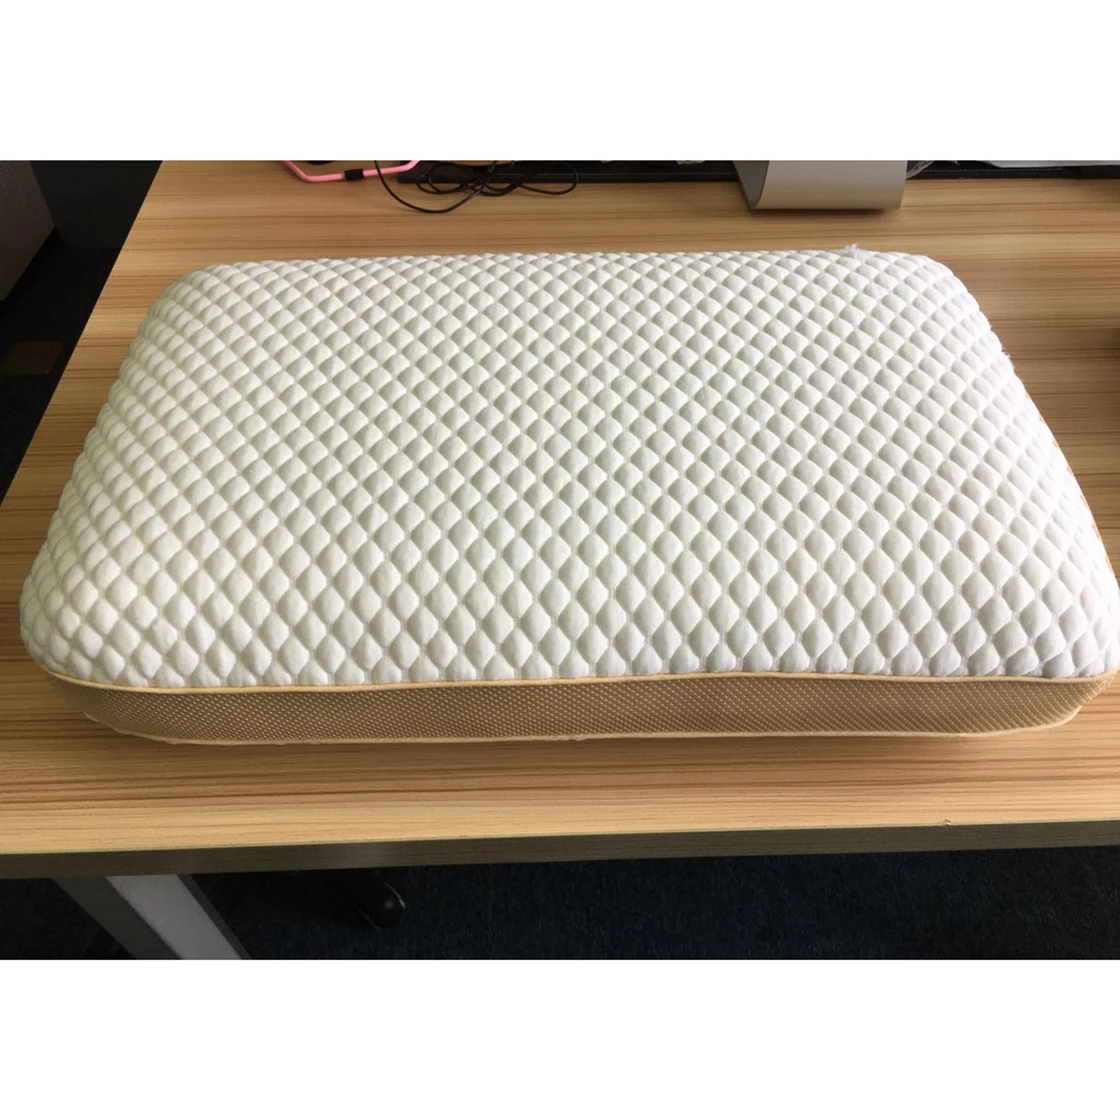 High quality memory foam pillow for neck health